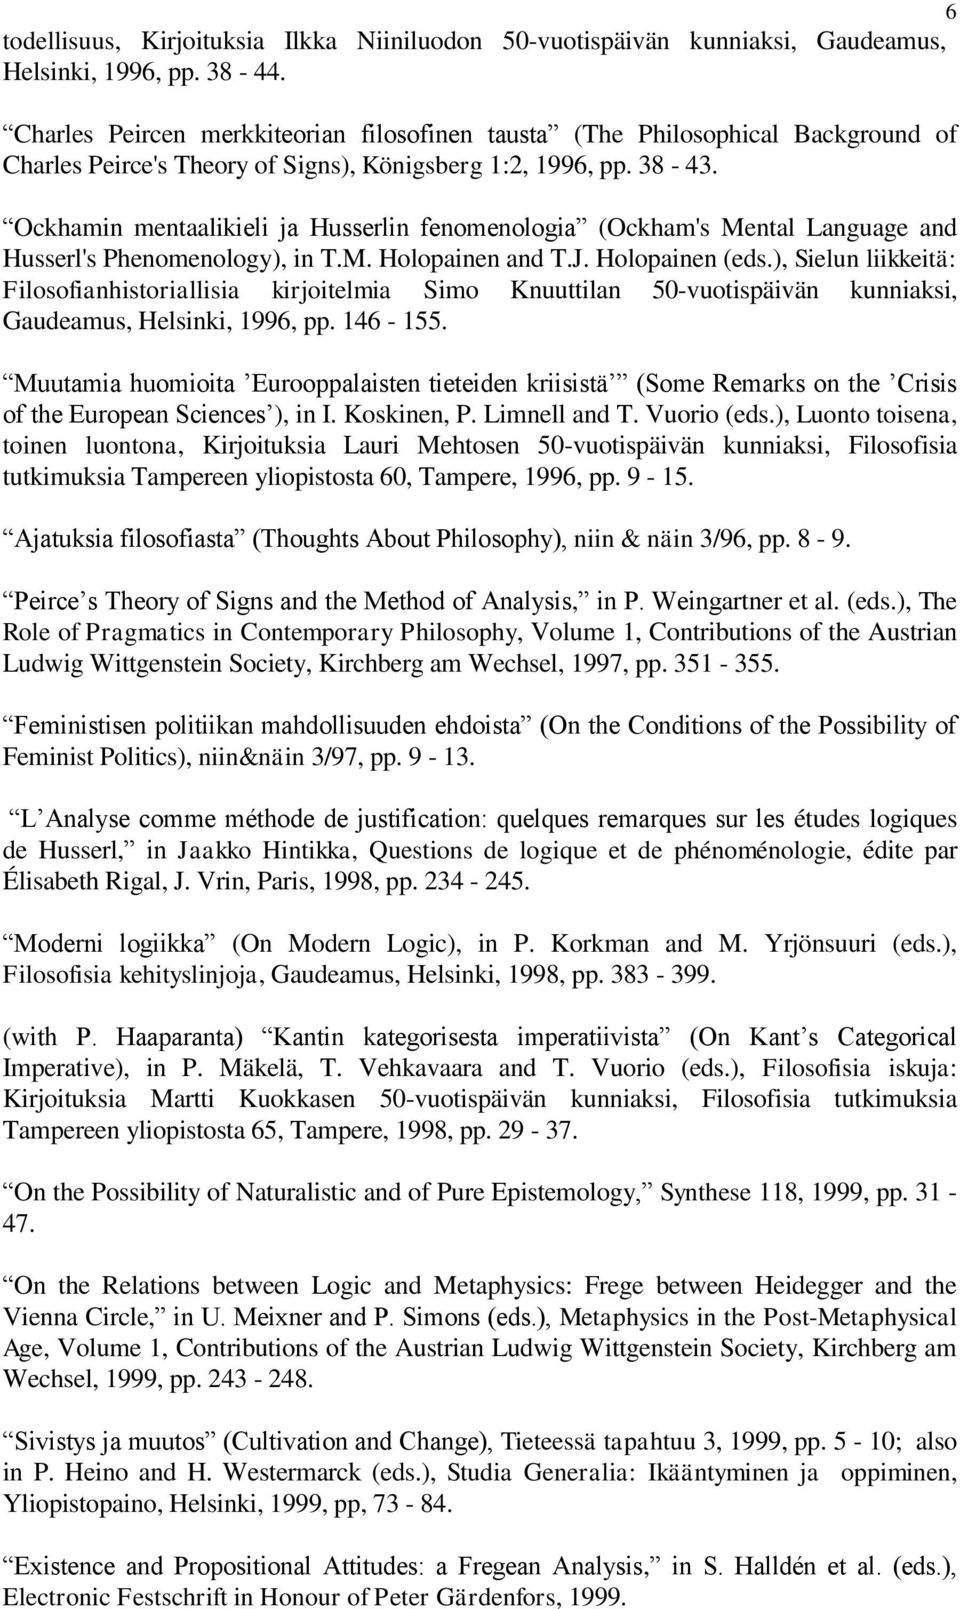 Ockhamin mentaalikieli ja Husserlin fenomenologia (Ockham's Mental Language and Husserl's Phenomenology), in T.M. Holopainen and T.J. Holopainen (eds.